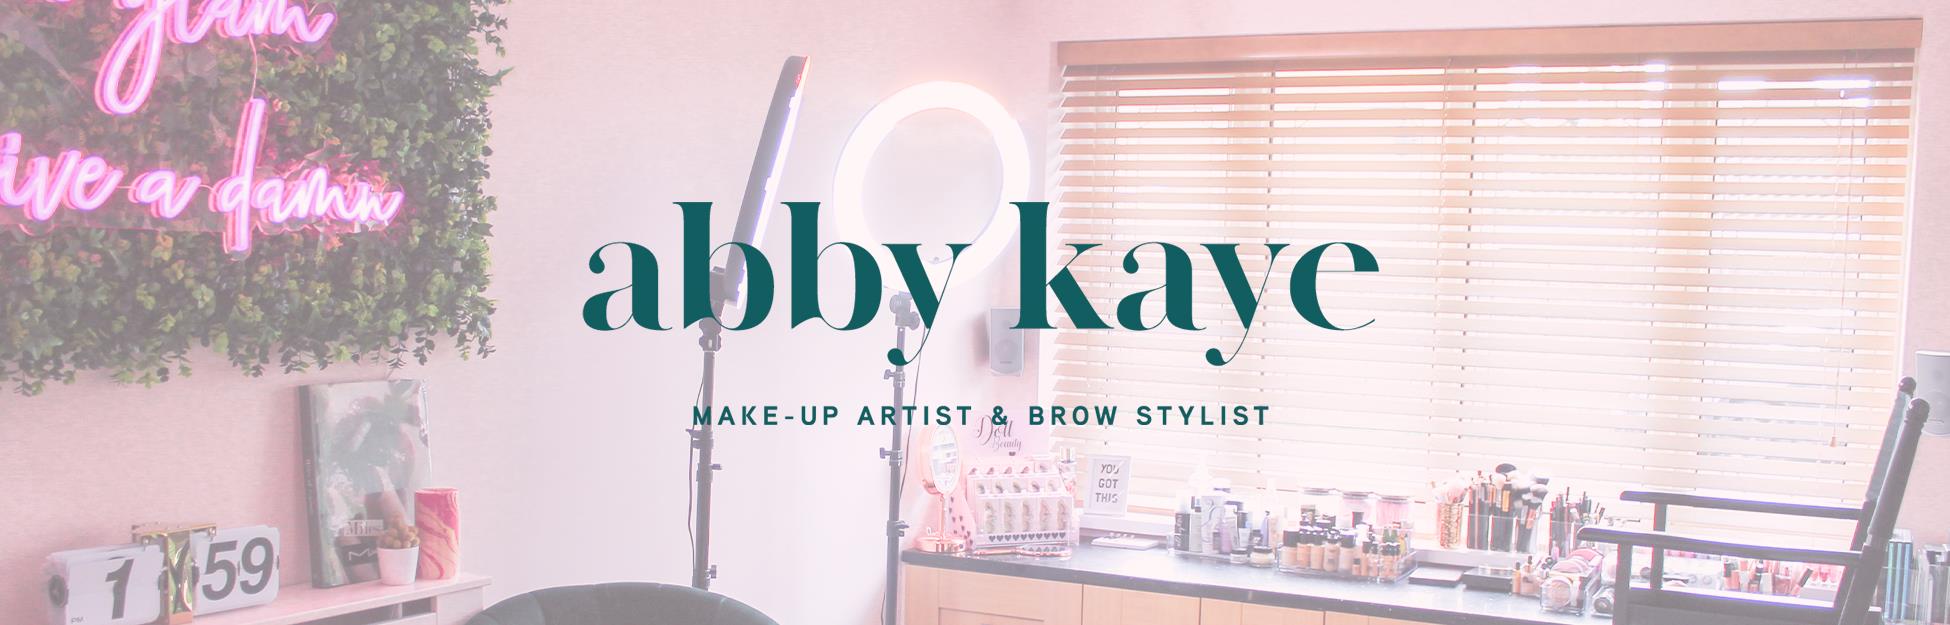 Abby Kaye Makeup Artist & Brow Stylist